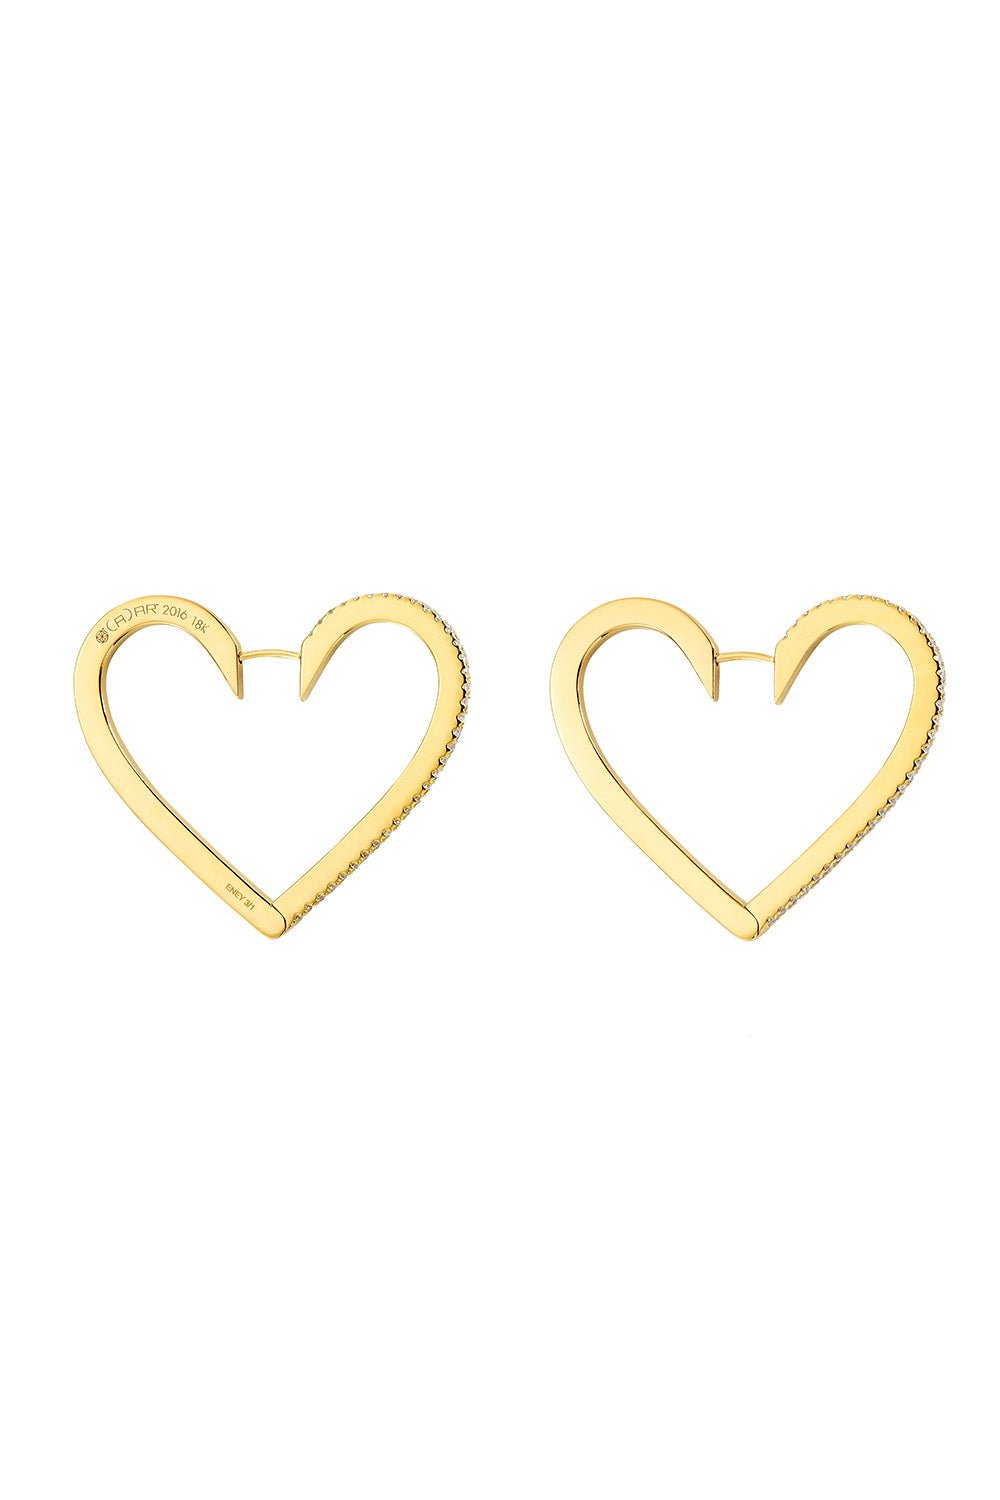 CADAR-Large Endless Hoop Earrings-YELLOW GOLD